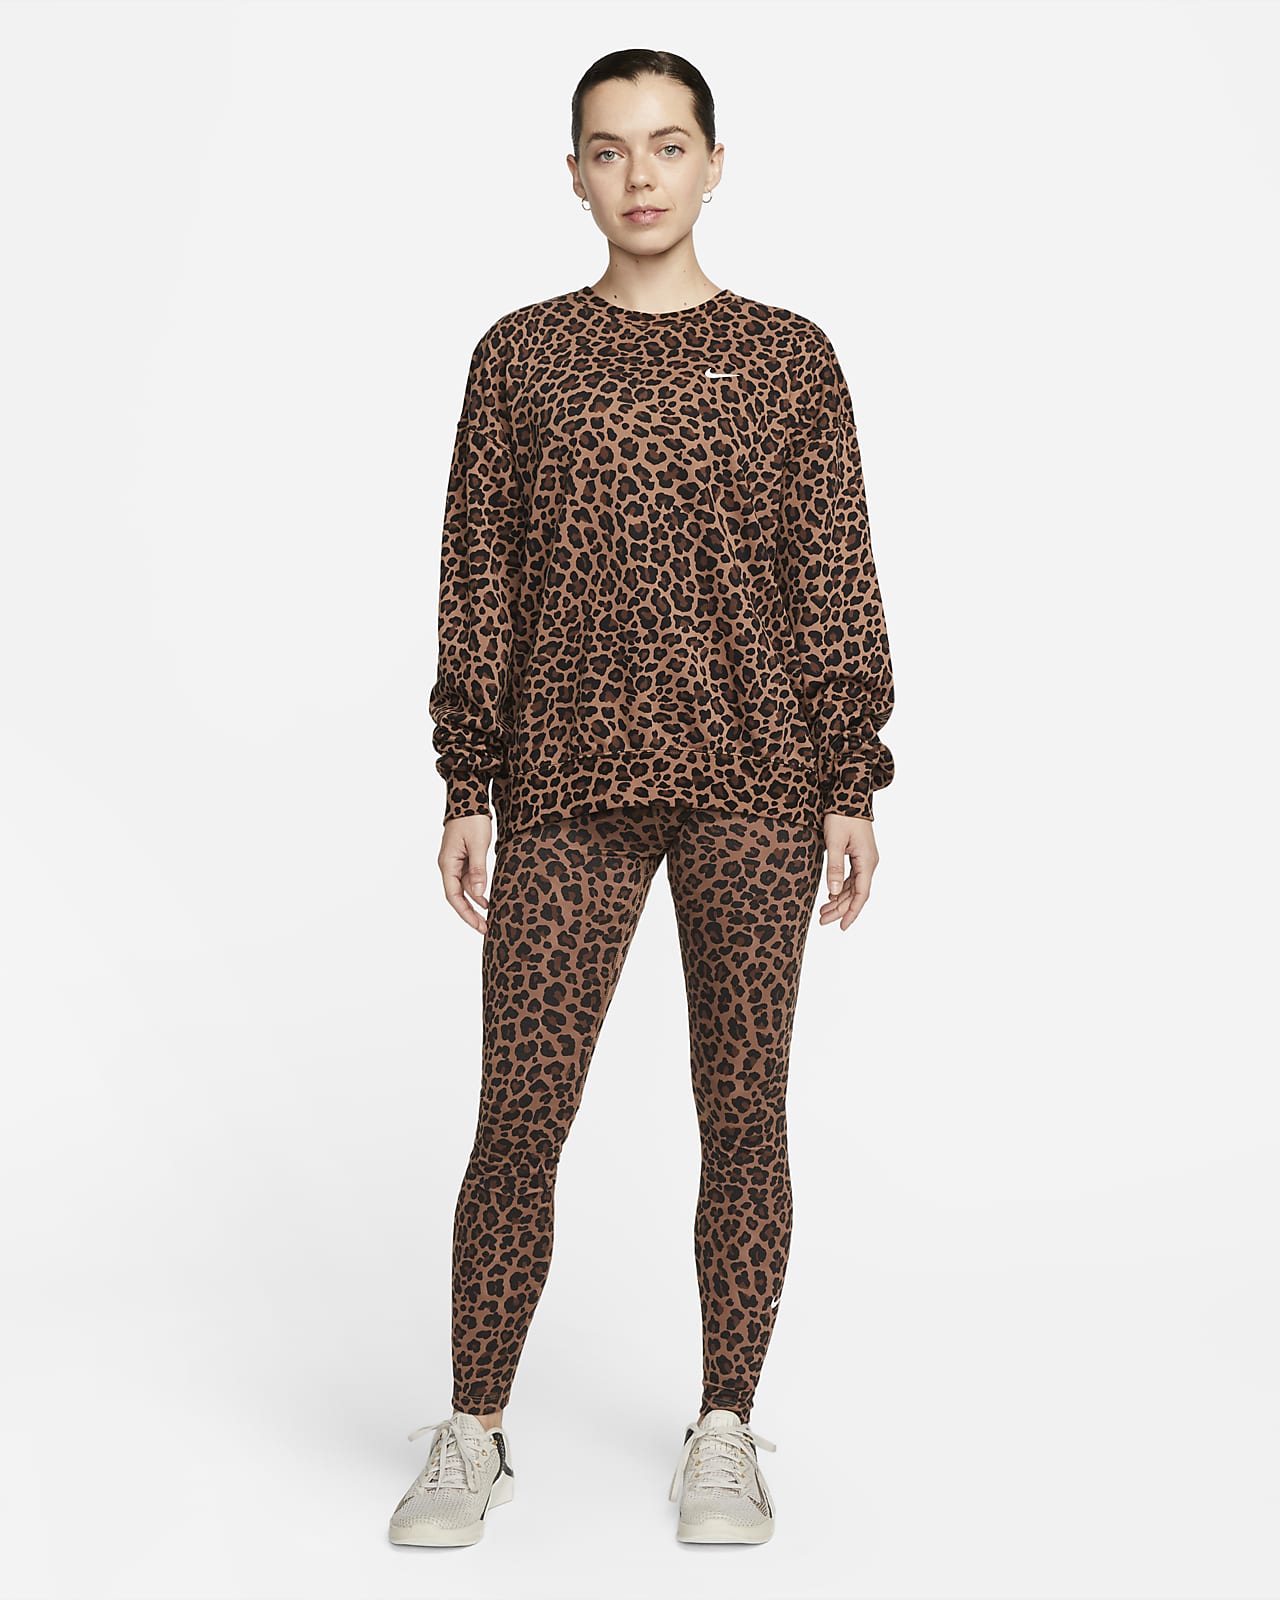 con redondo de French Terry estampado de leopardo para mujer Nike Dri-FIT Get Fit. Nike.com